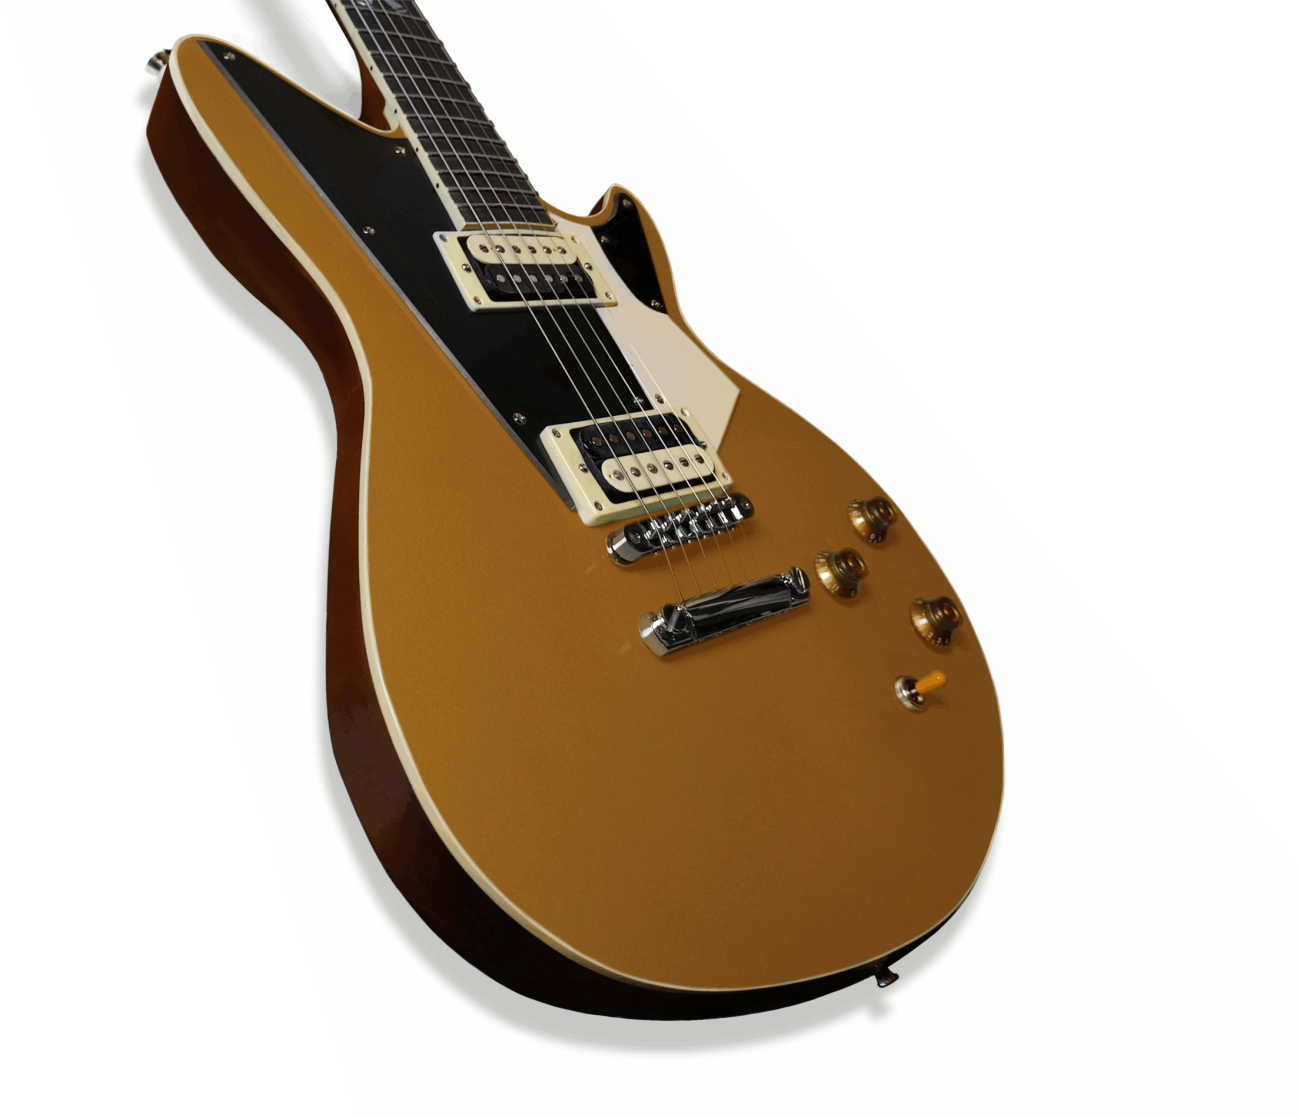 The new Morifone guitar model, the Spada. Goldtop with zebra humbuckers, triple pickguard configuration.